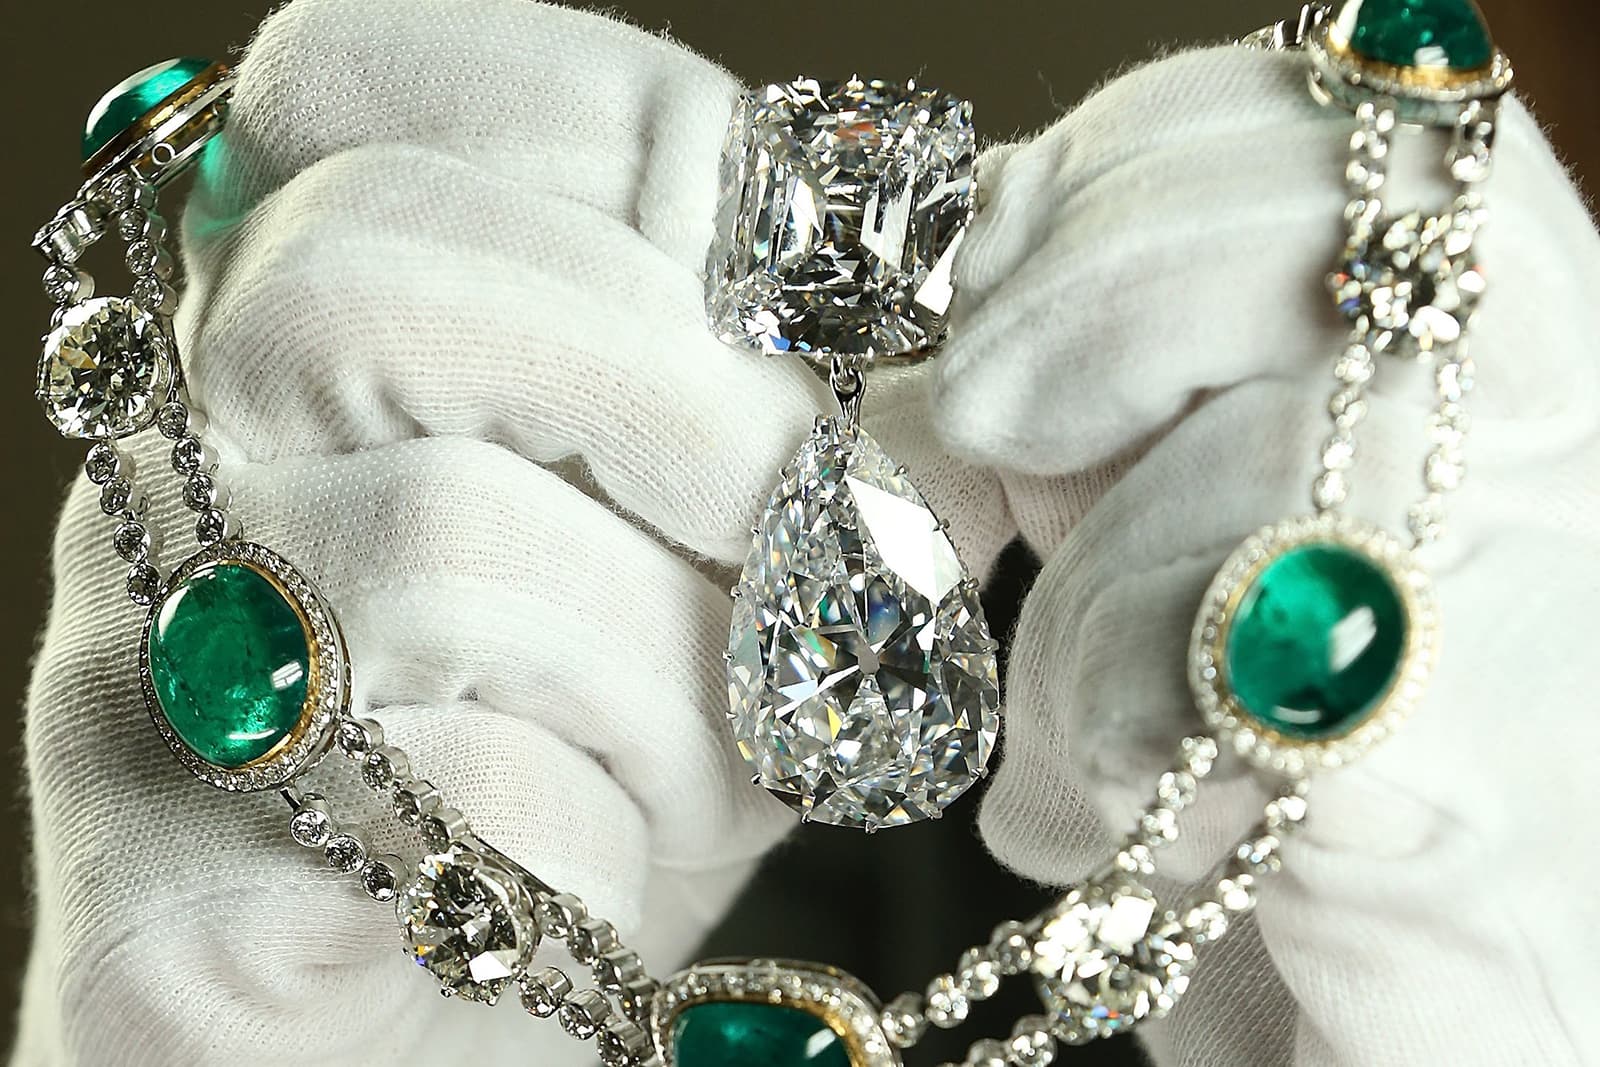 The Cullinan Diamonds brooch, Cullinan VII Delhi Durbar necklace and Cullinan pendant. Image by Samir Hussein